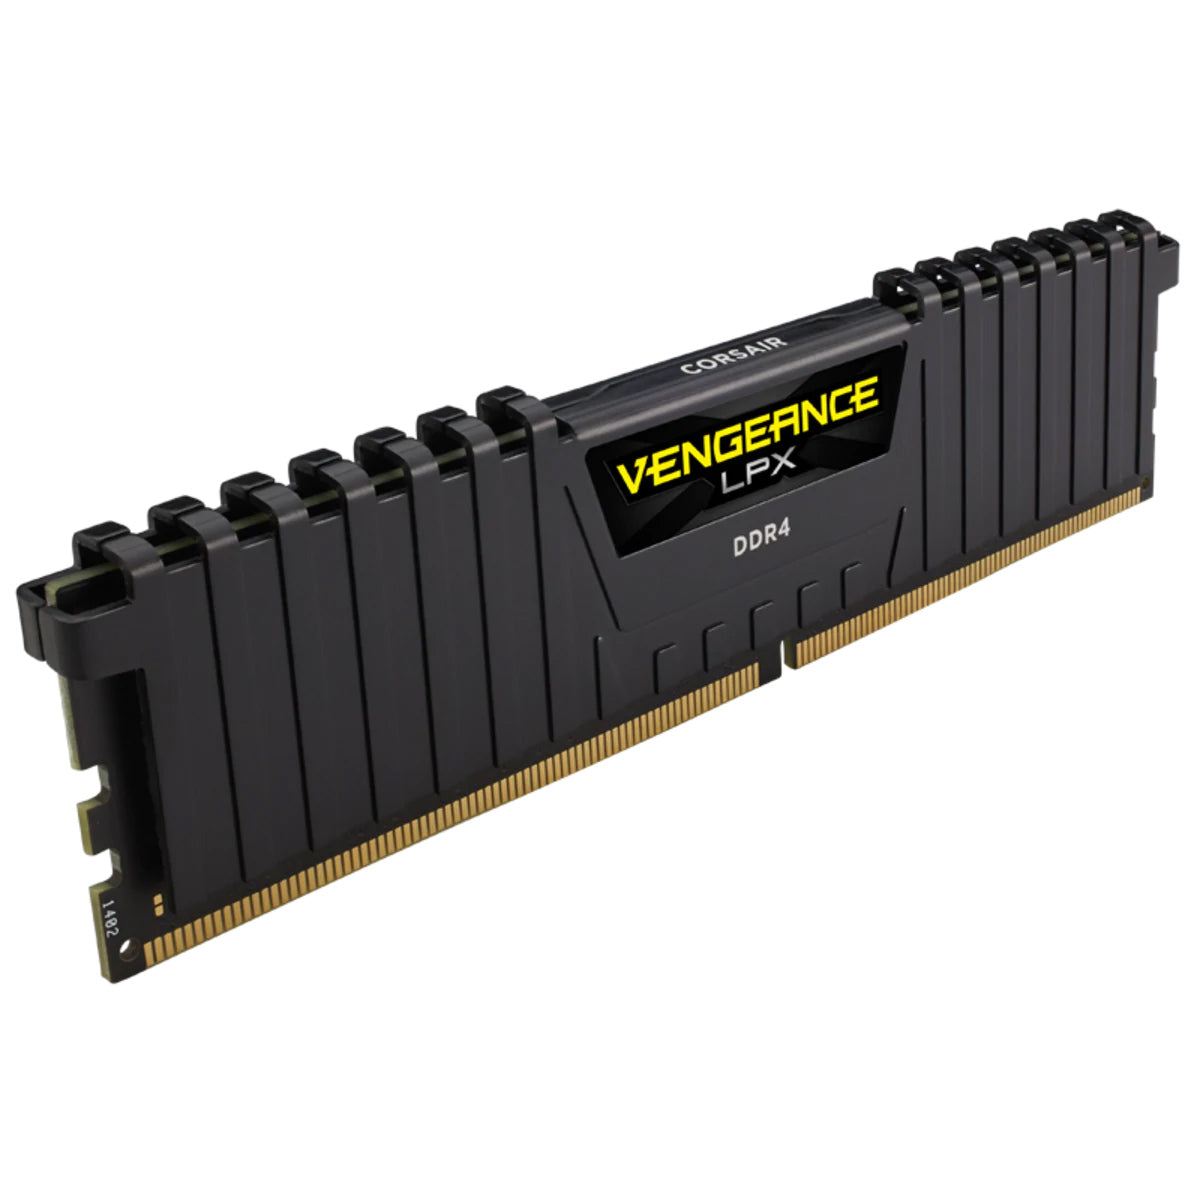 Corsair Vengeance LPX RAM 8GB DDR4 RAM 3600MHz Desktop Memory